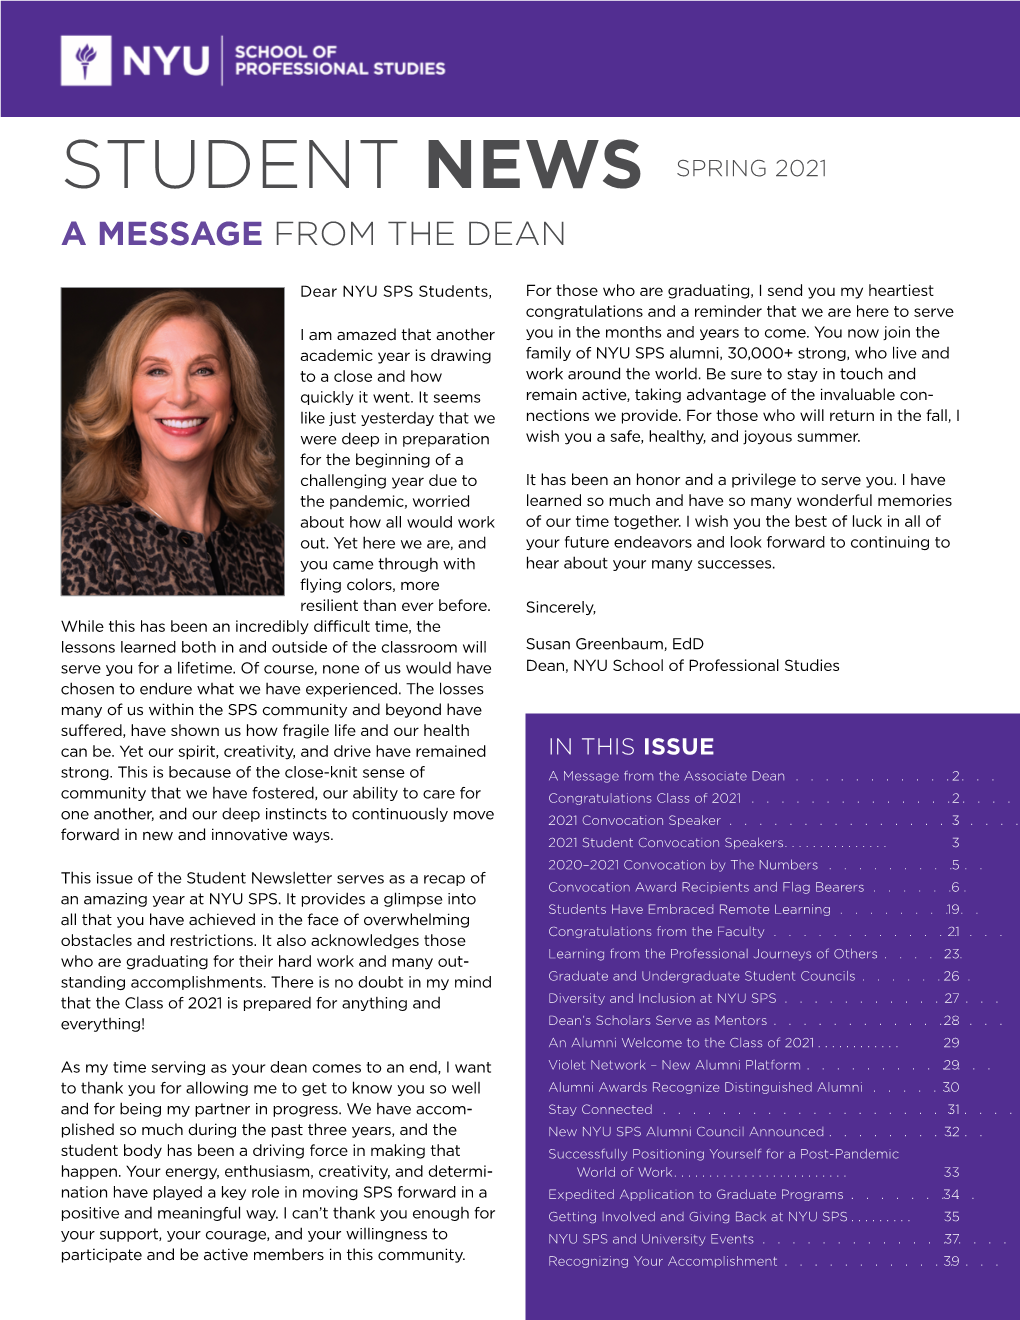 NYU SPS Student News